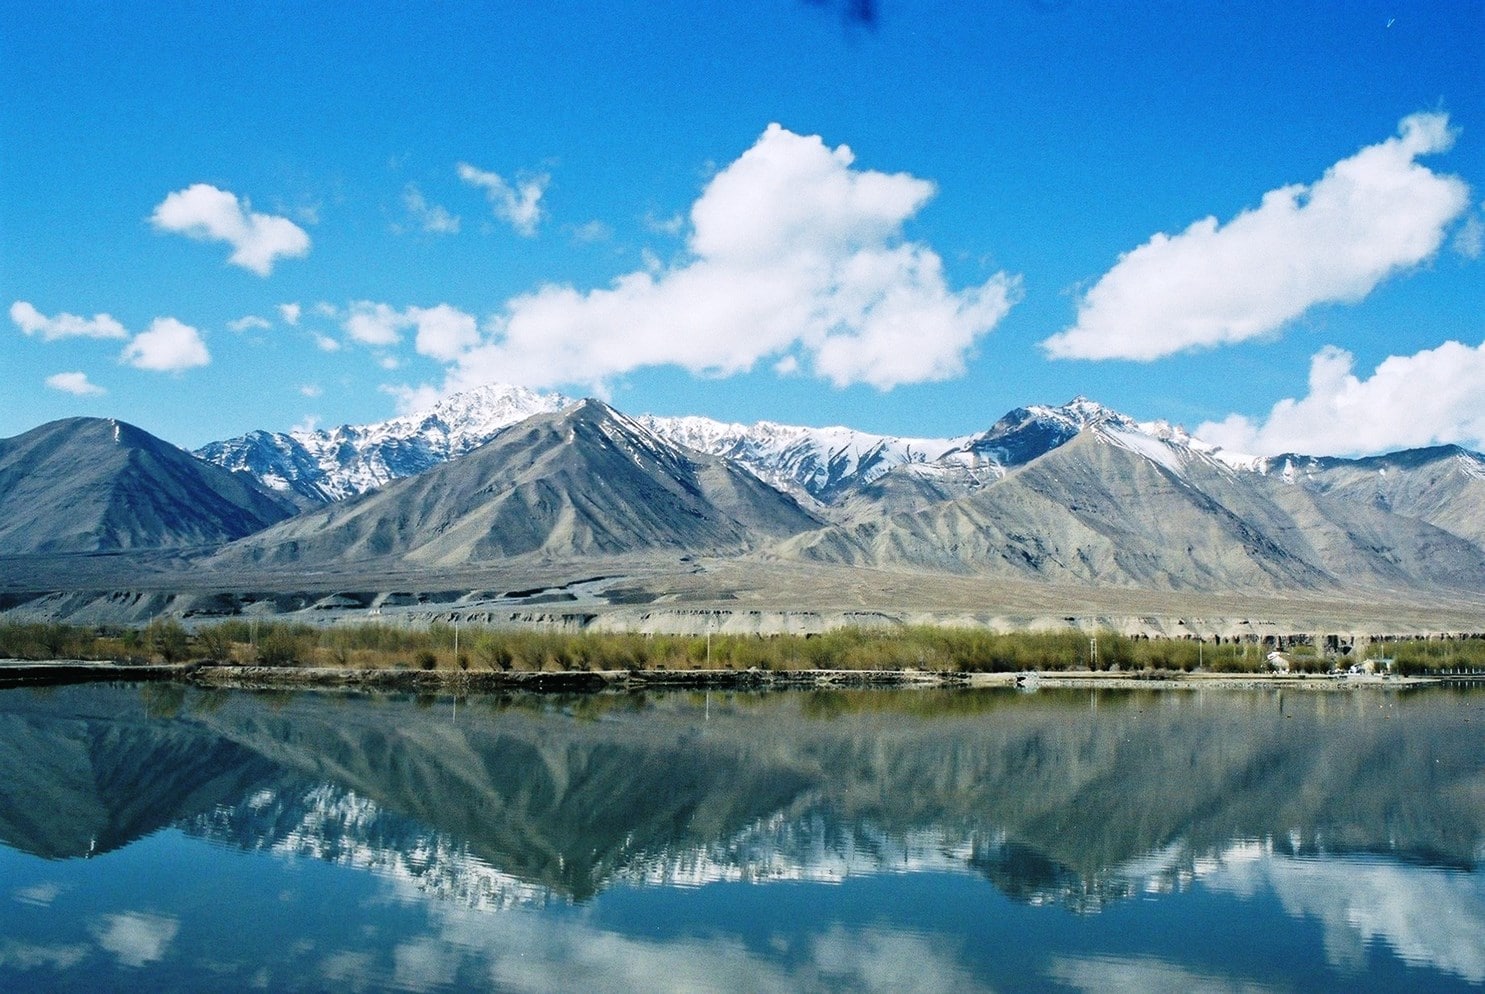 Leh-Ladakh – The Biker’s Paradise